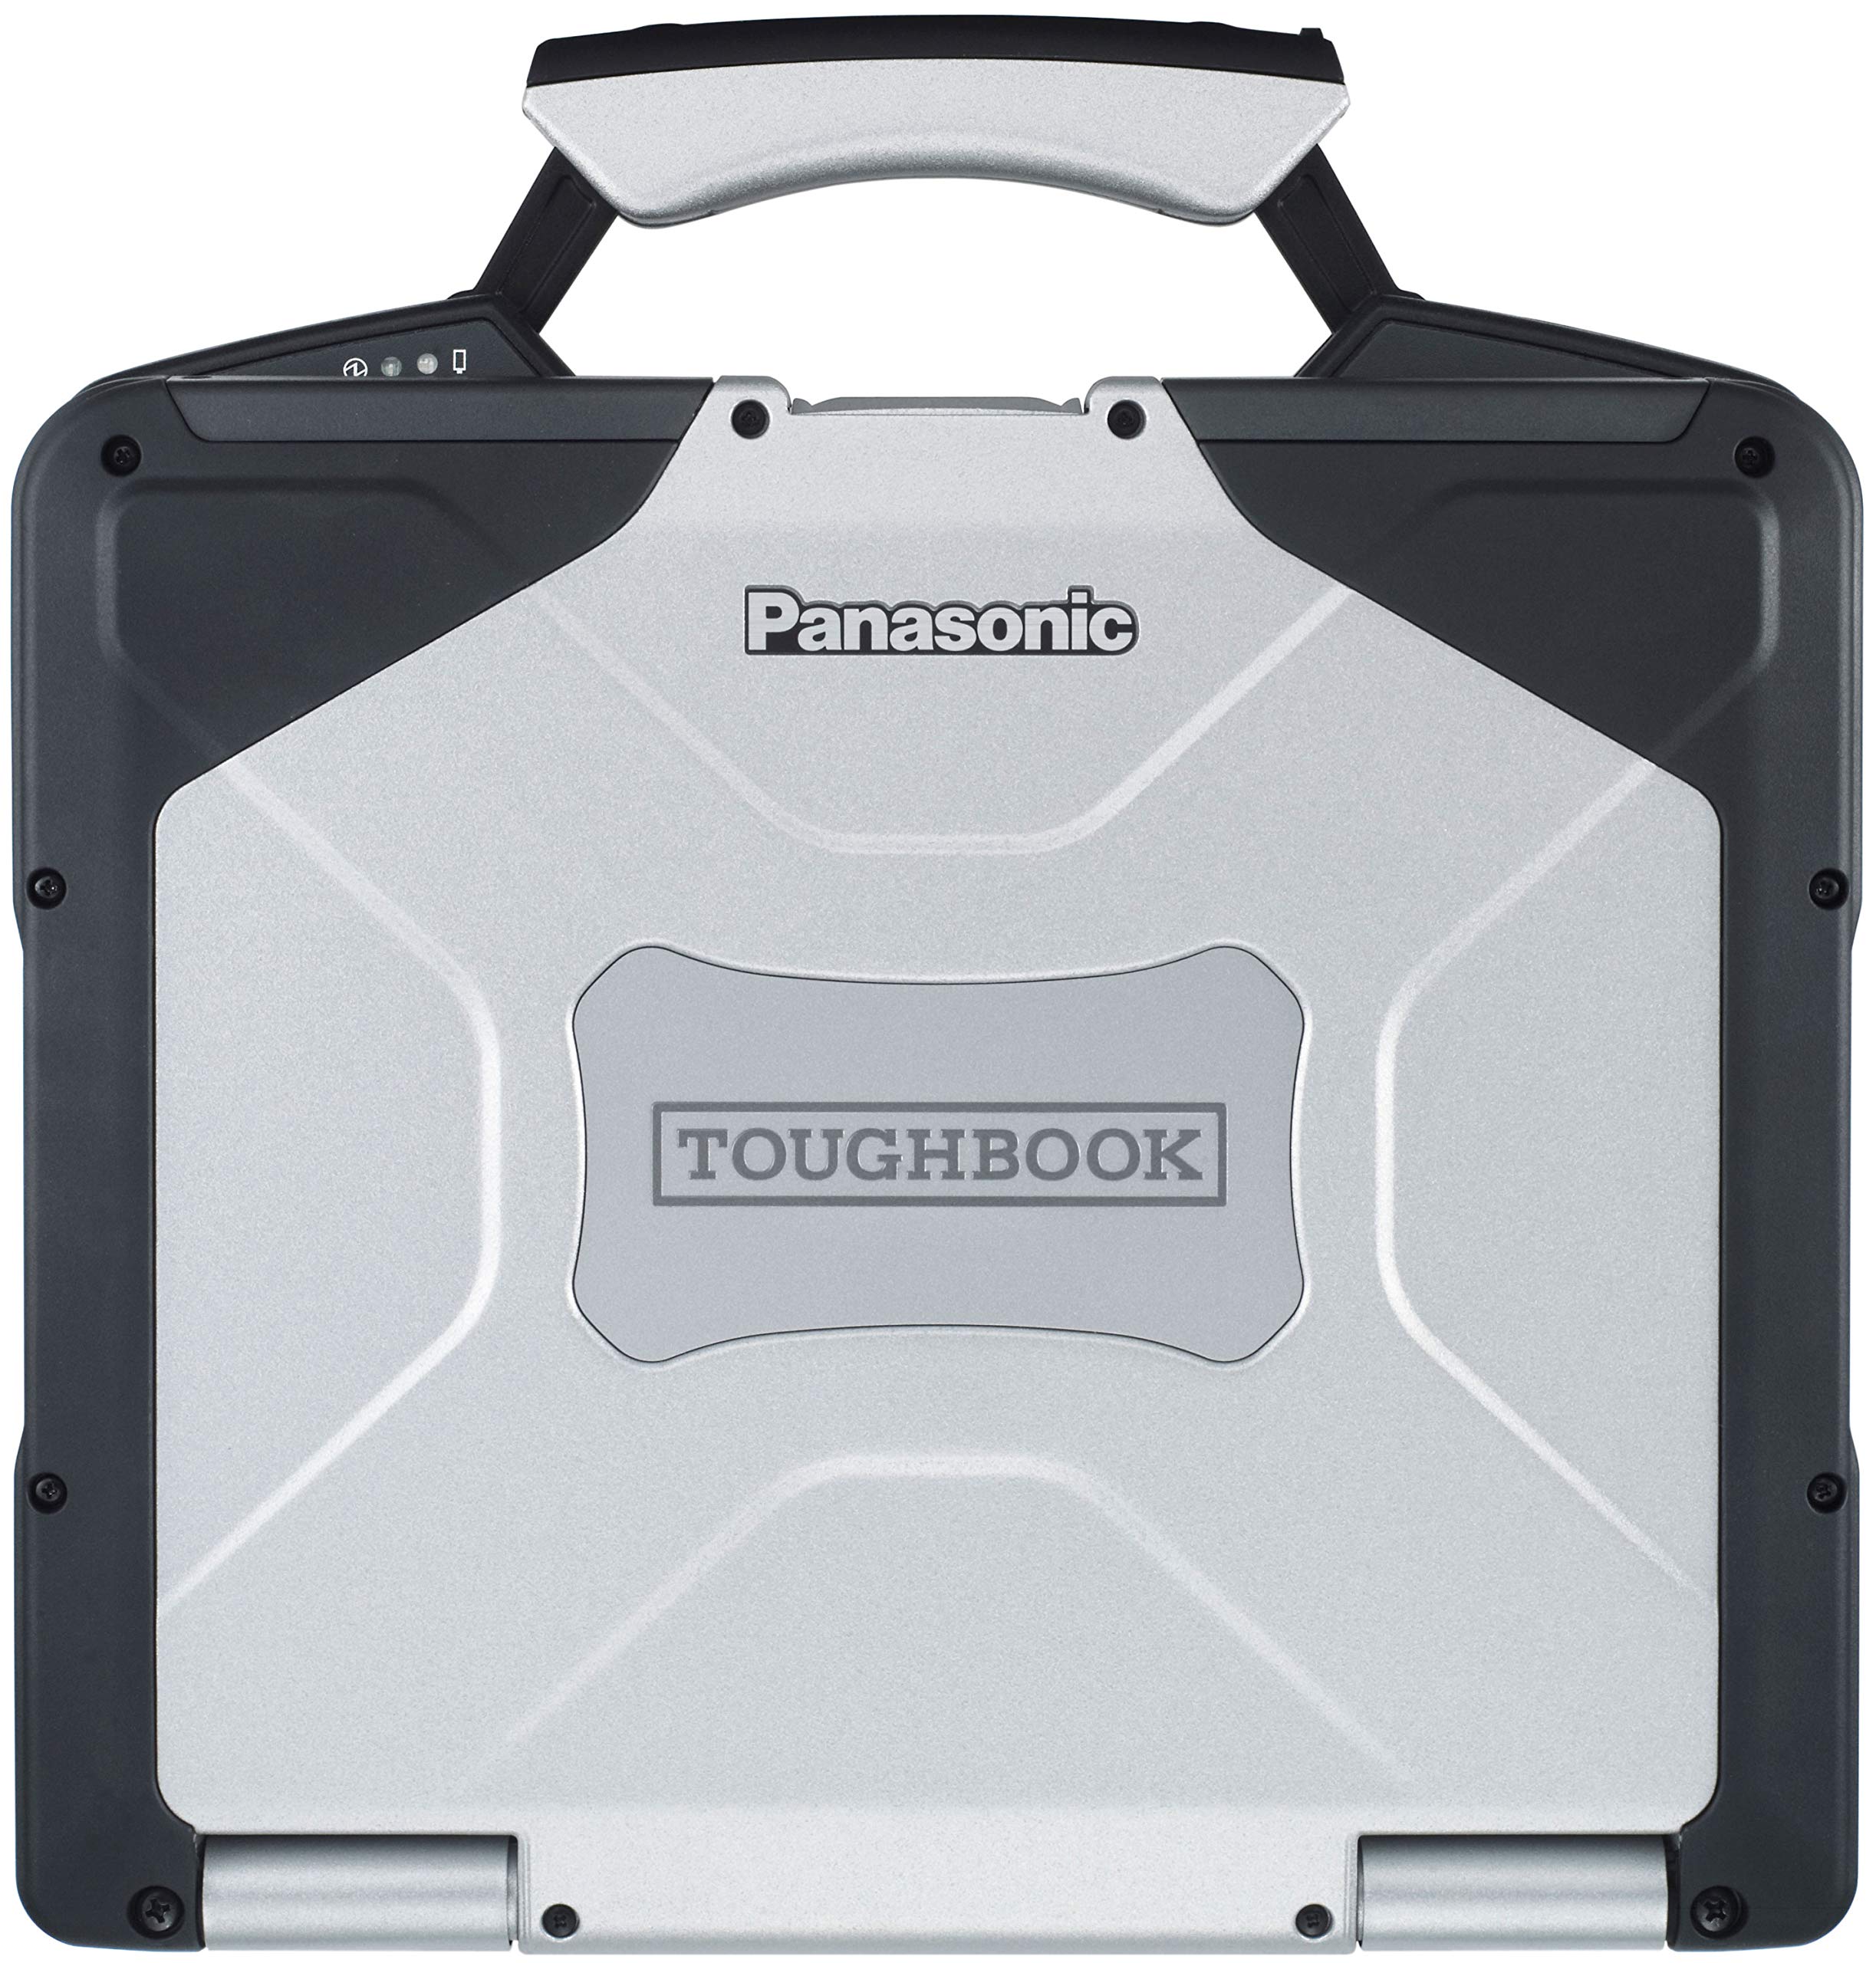 Panasonic Toughbook 31, CF-31 MK6, 13.1-inch XGA Touch, Intel Core i5-7300M @2.60GHz, 32GB, 1TB SSD, Wi-Fi, BT, 4G LTE Multi Carrier, GPS, Emissive Backlit Keyboard, Windows 10 Pro (Renewed)